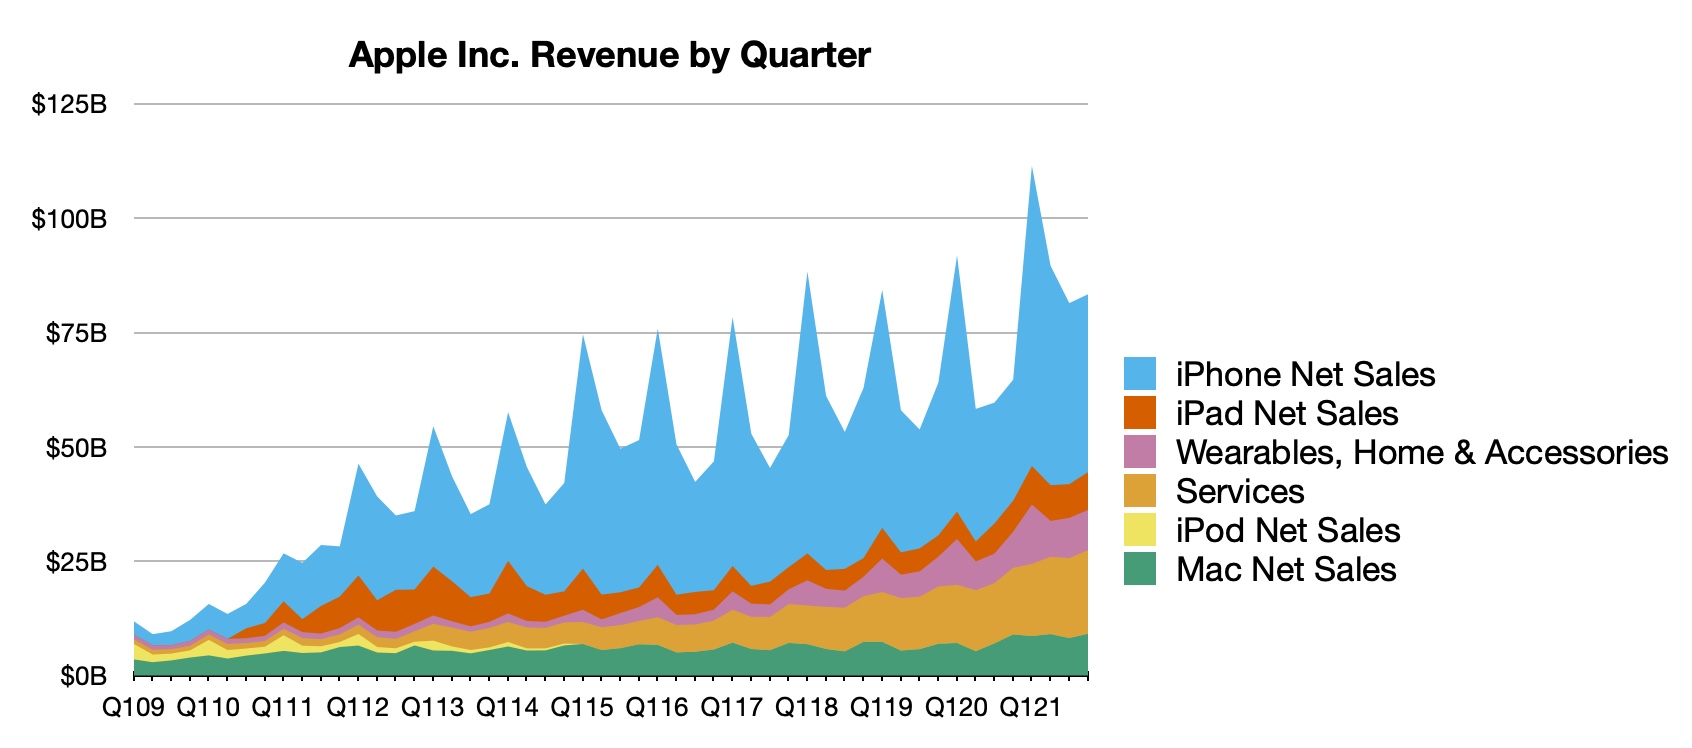 Apple reports Q4 2021 earnings of $20.6 billion on revenues of $83.4 billion